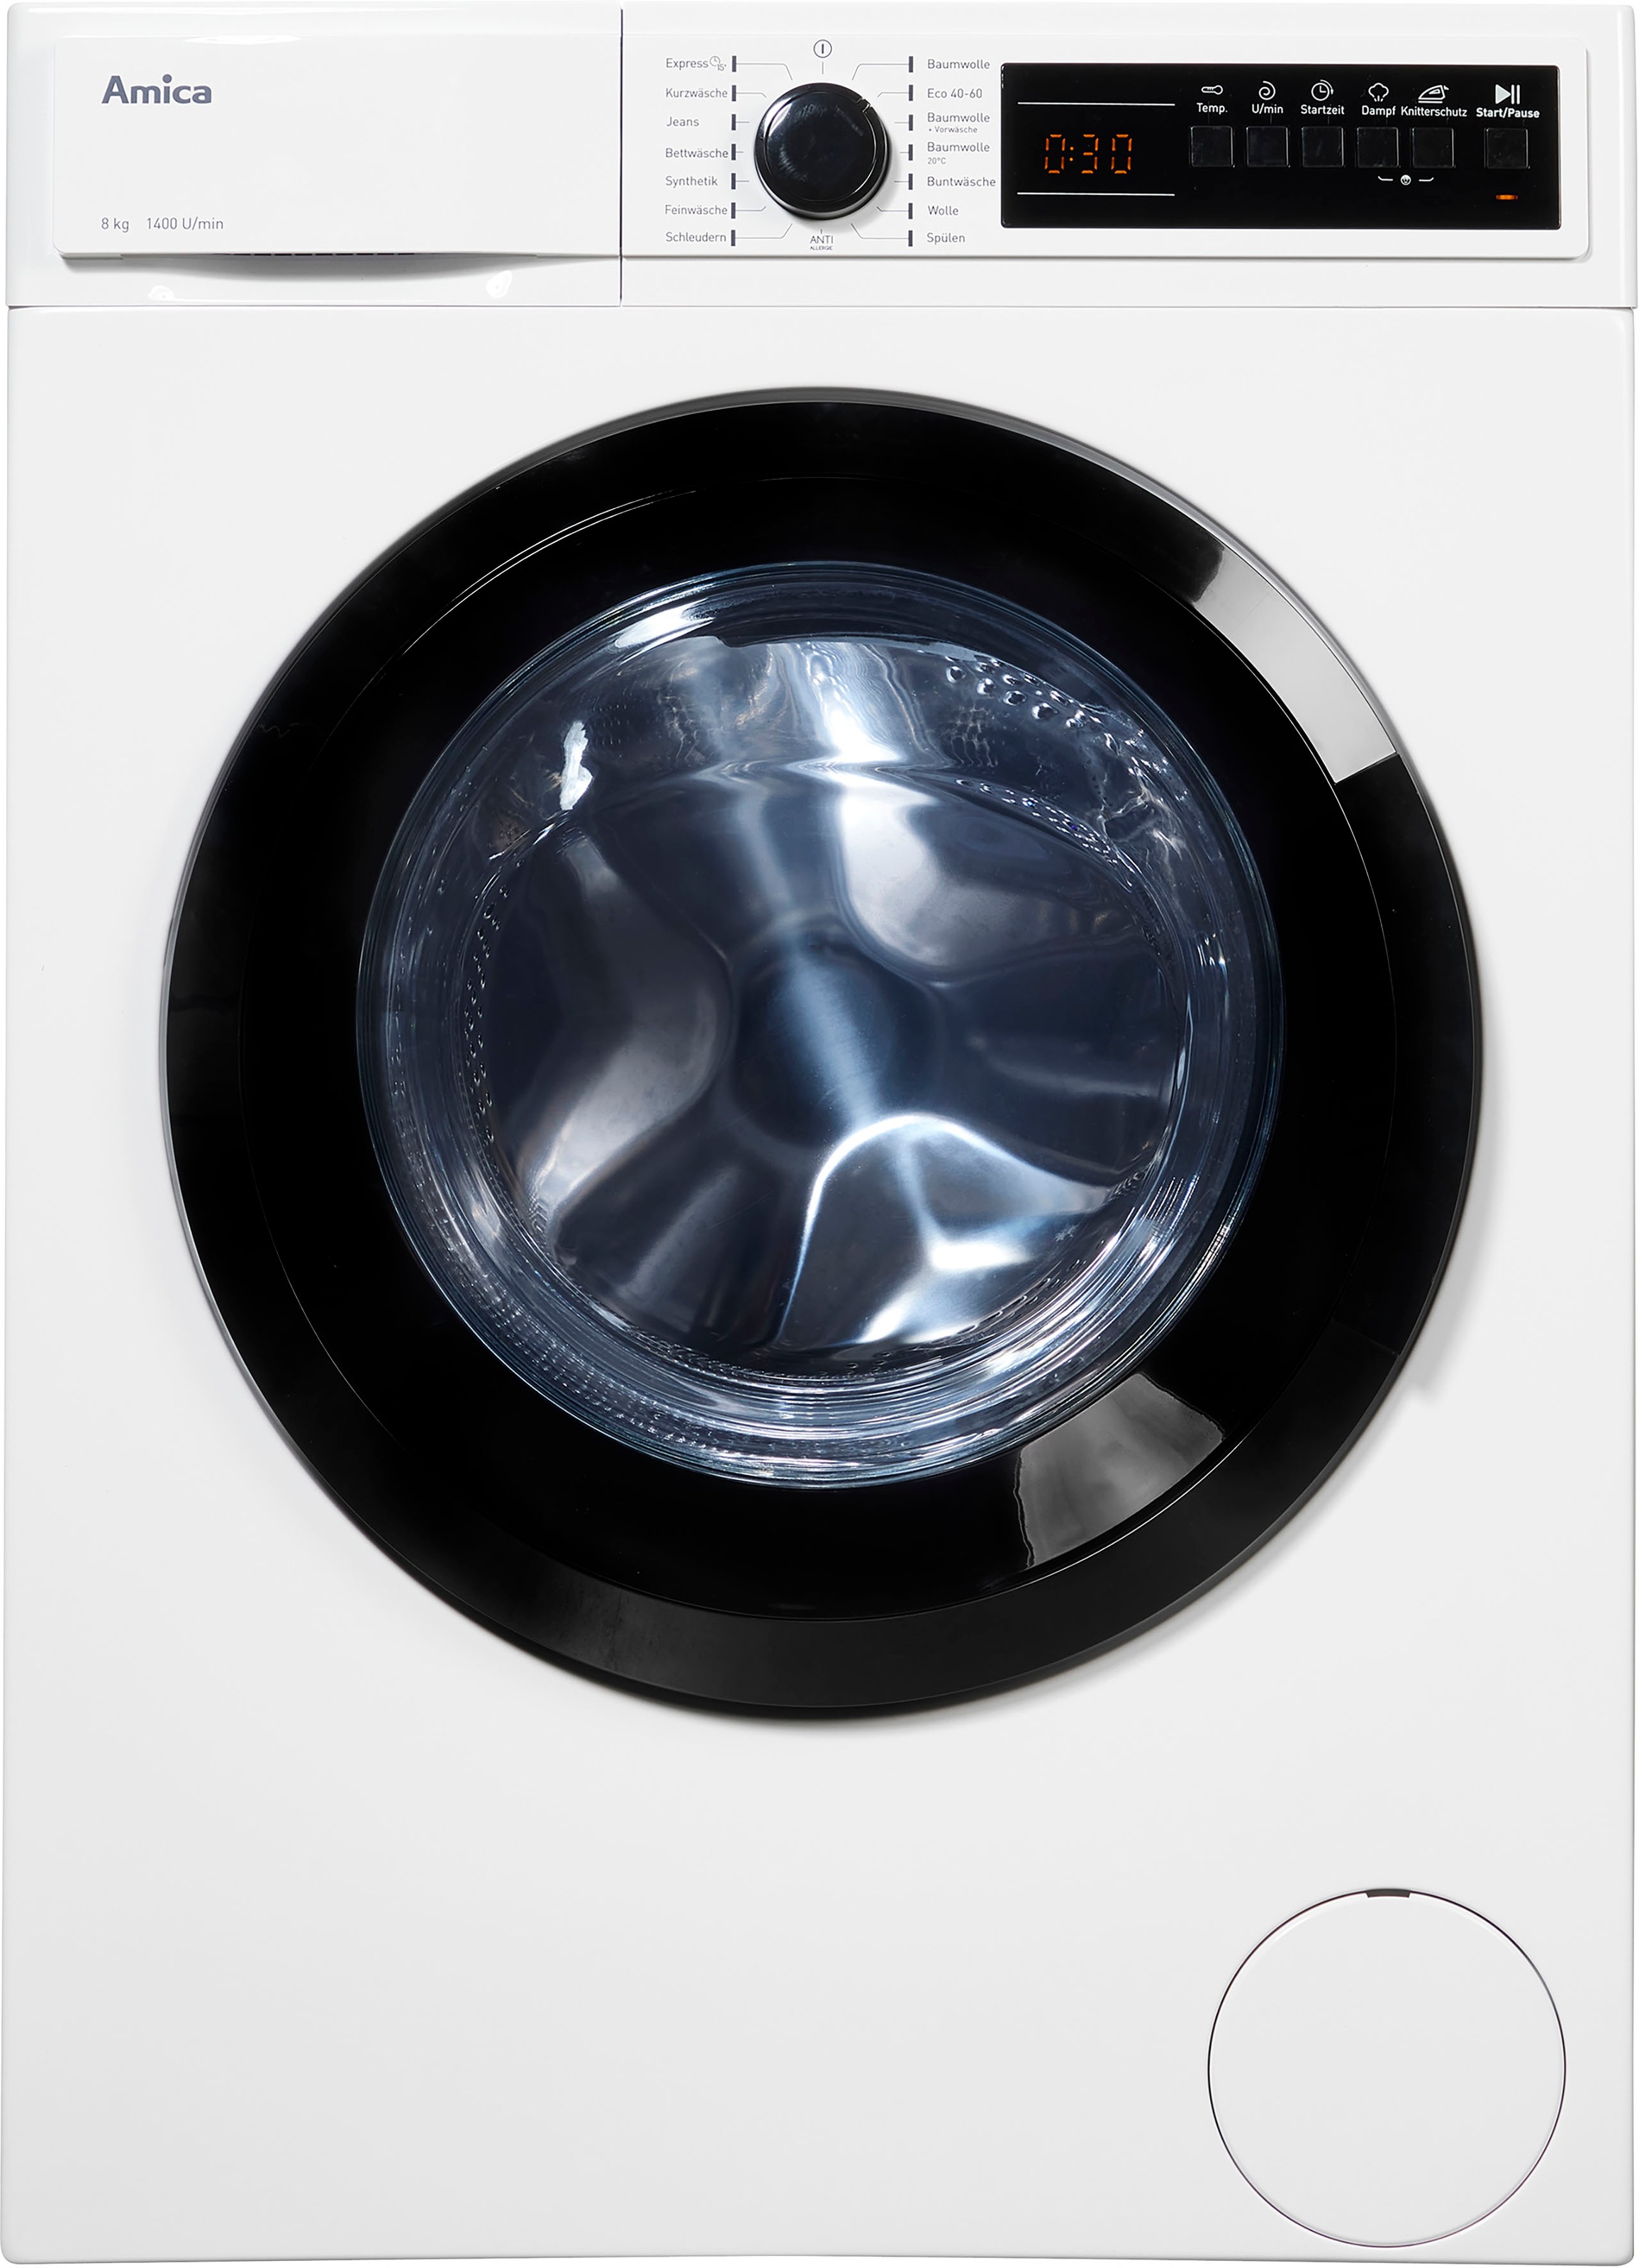 »WA 484 WA Amica Waschmaschine kaufen online 1400 kg, 8 081«, 484 U/min 081,